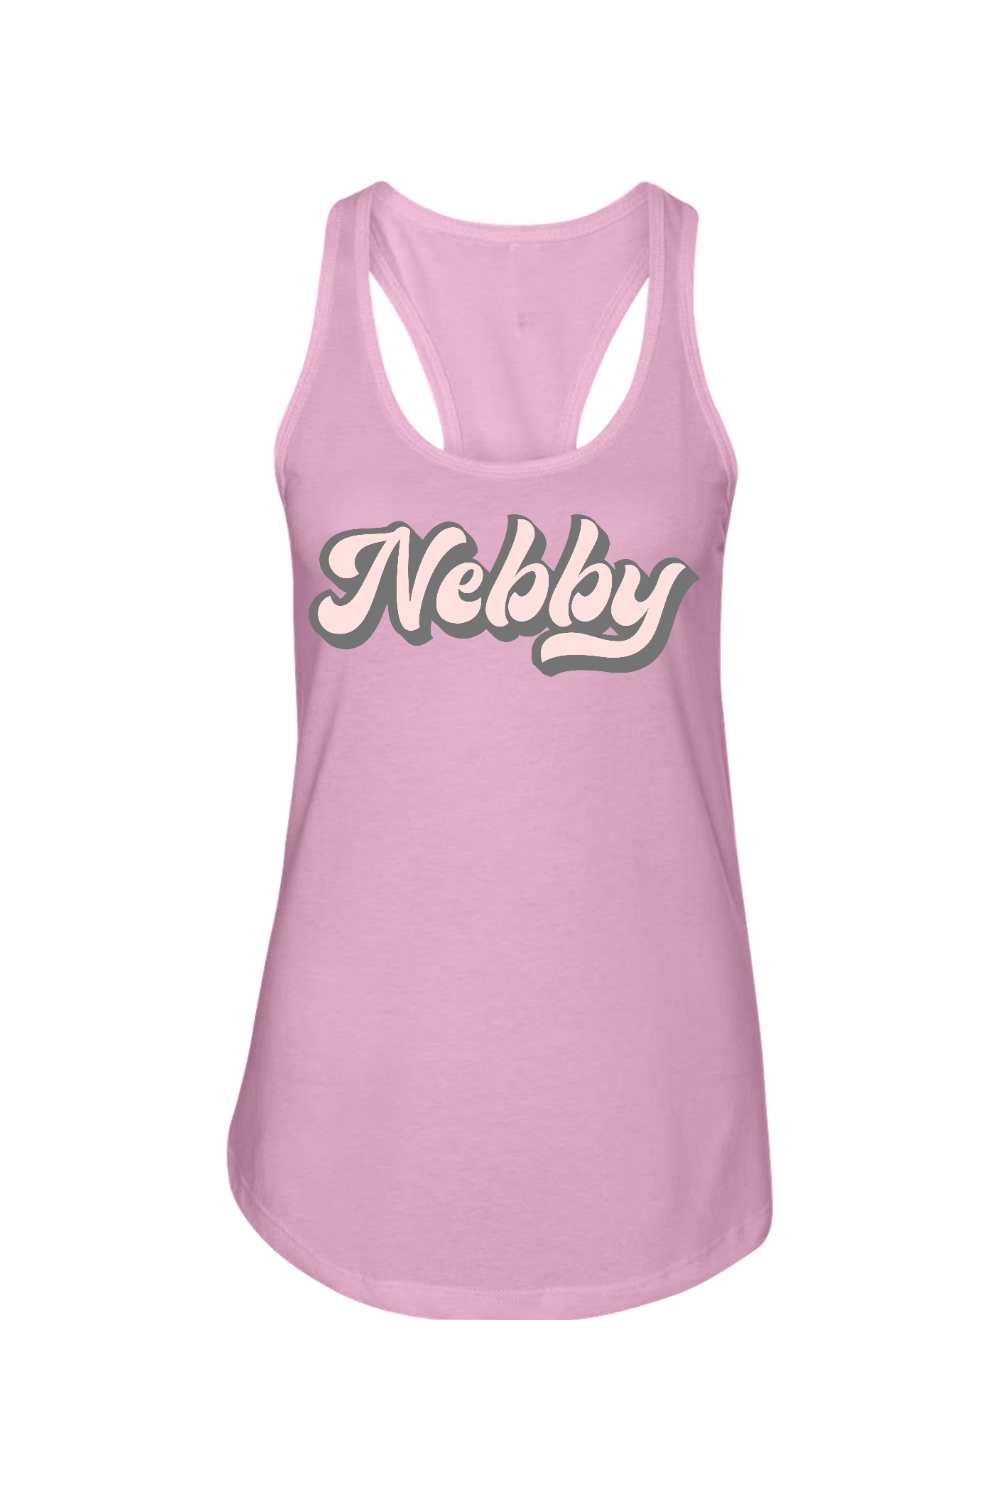 Nebby - Ladies Racerback Tank - Yinzylvania